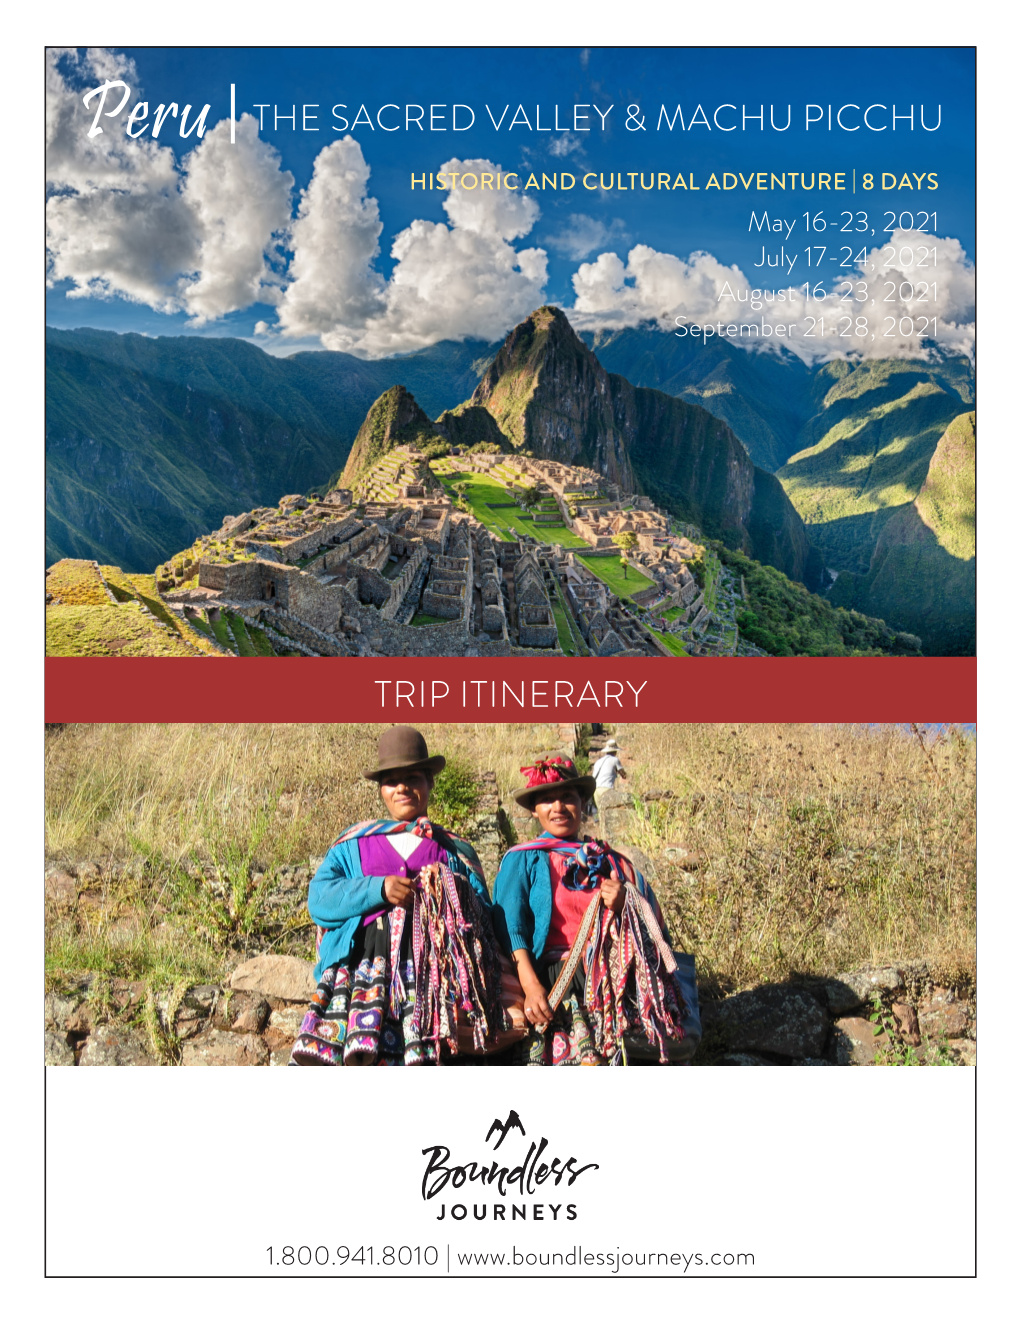 Peru | the SACRED VALLEY & MACHU PICCHU TRIP ITINERARY